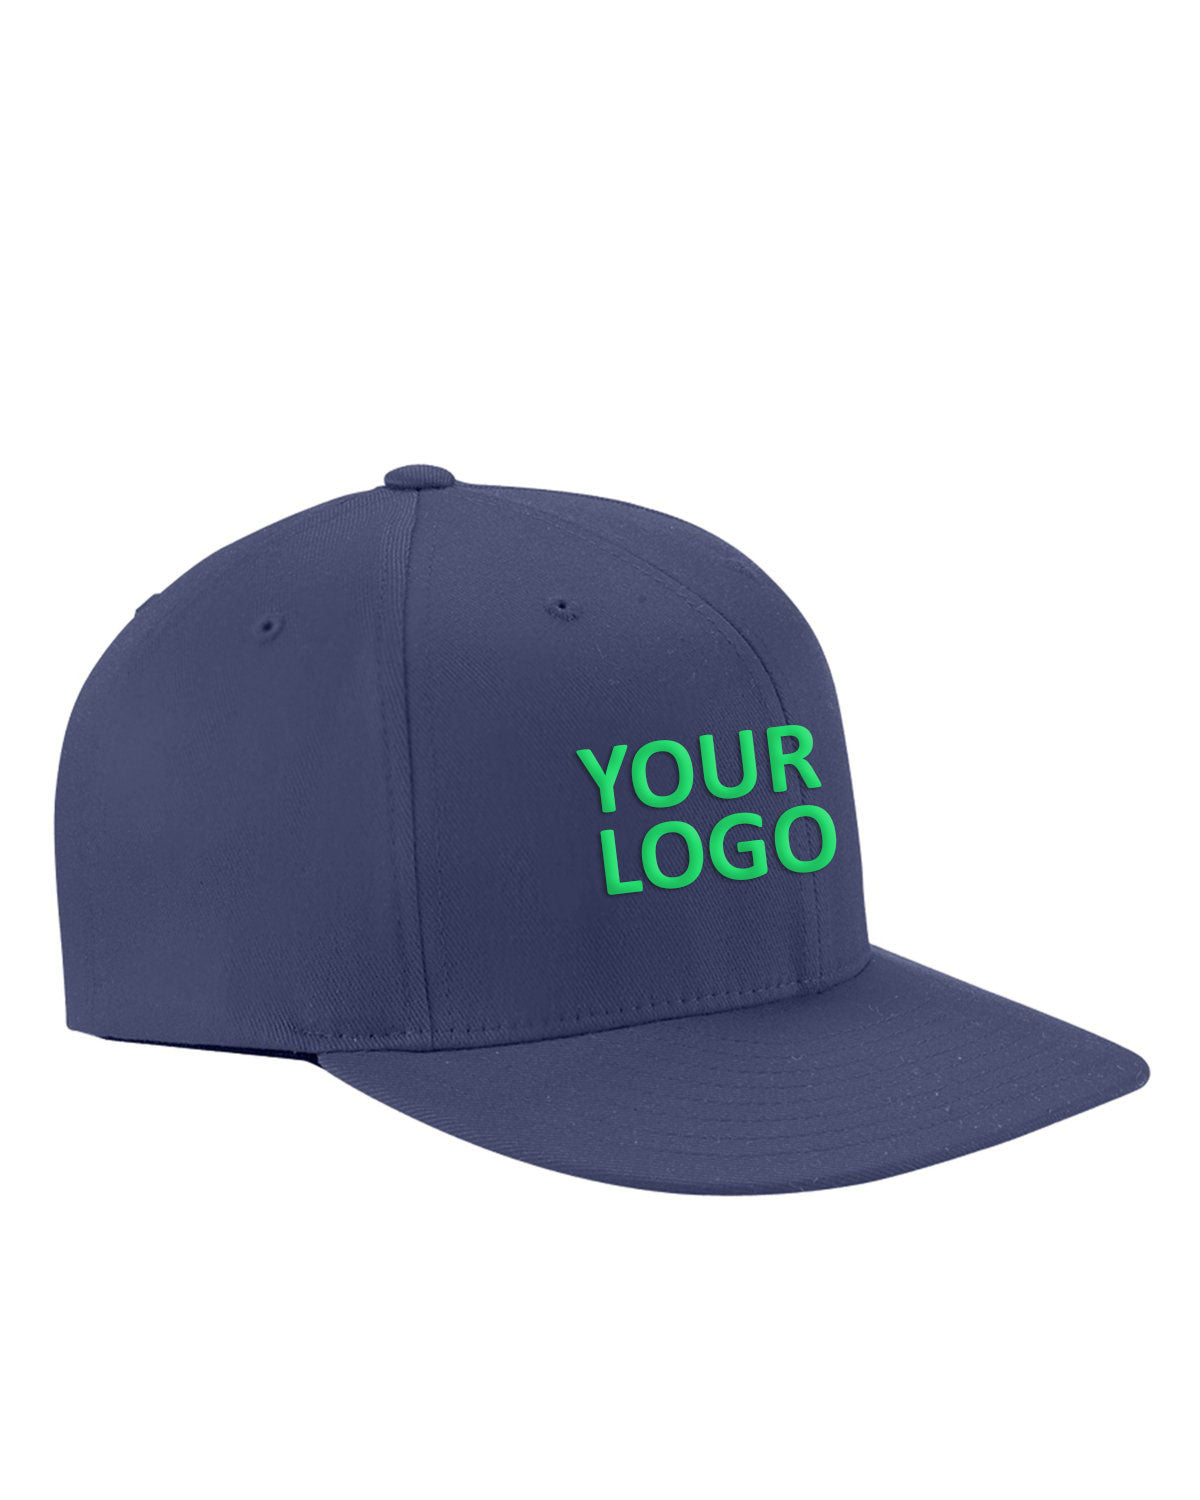 flexfit_6297f_navy_company_logo_headwear